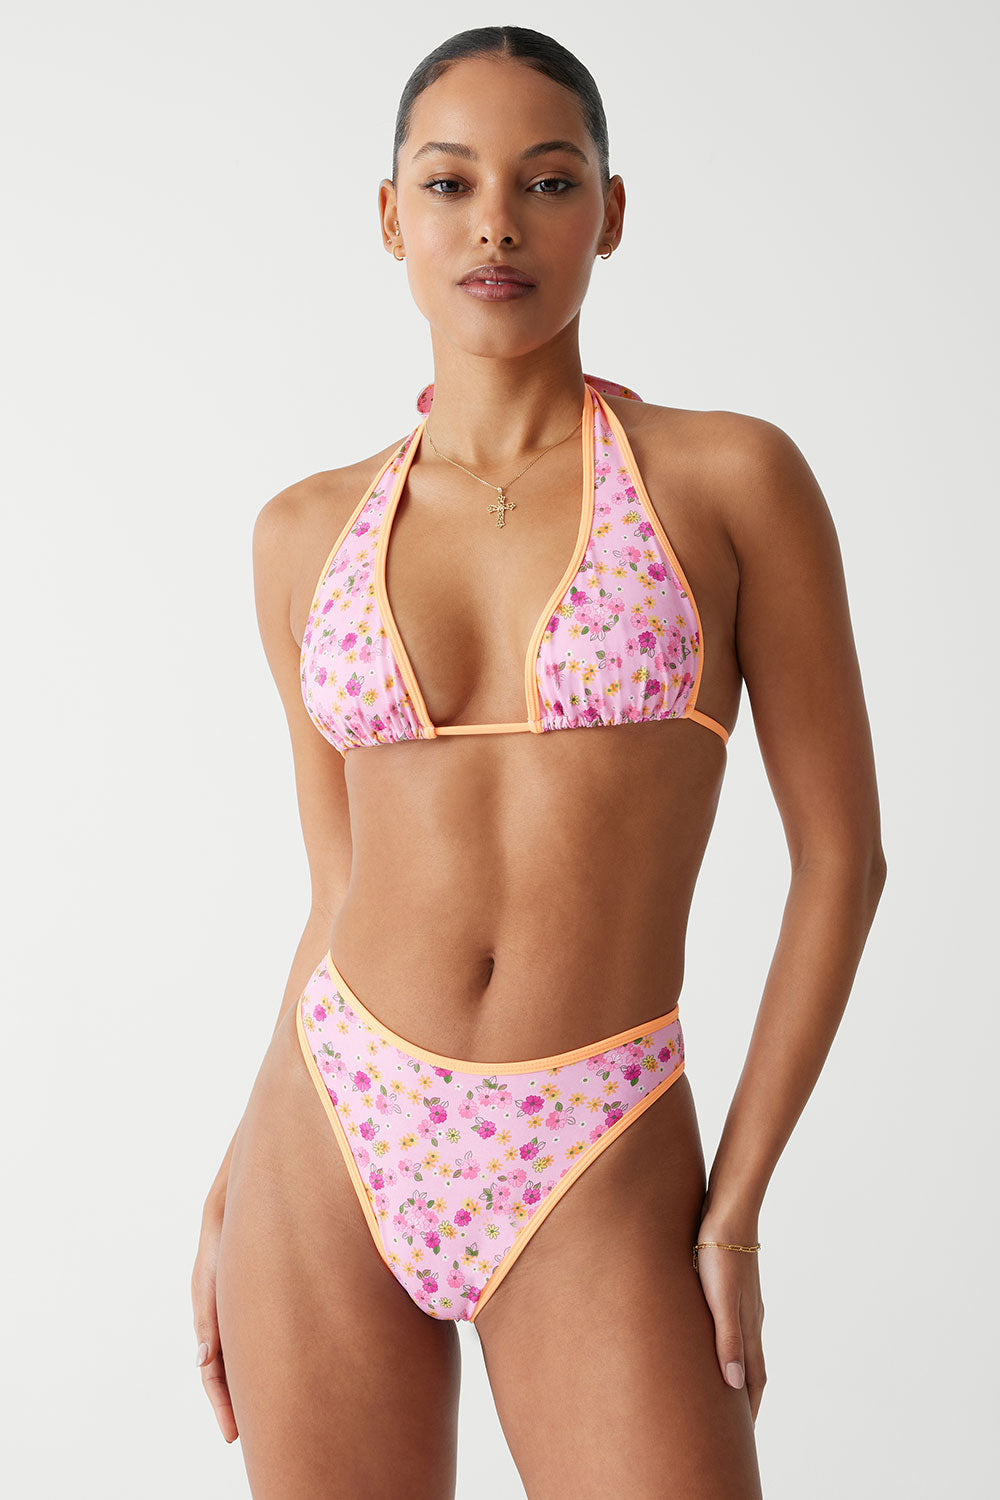 Bikini, Pink triangle top & white cheeky bottoms, size medium, brand new.